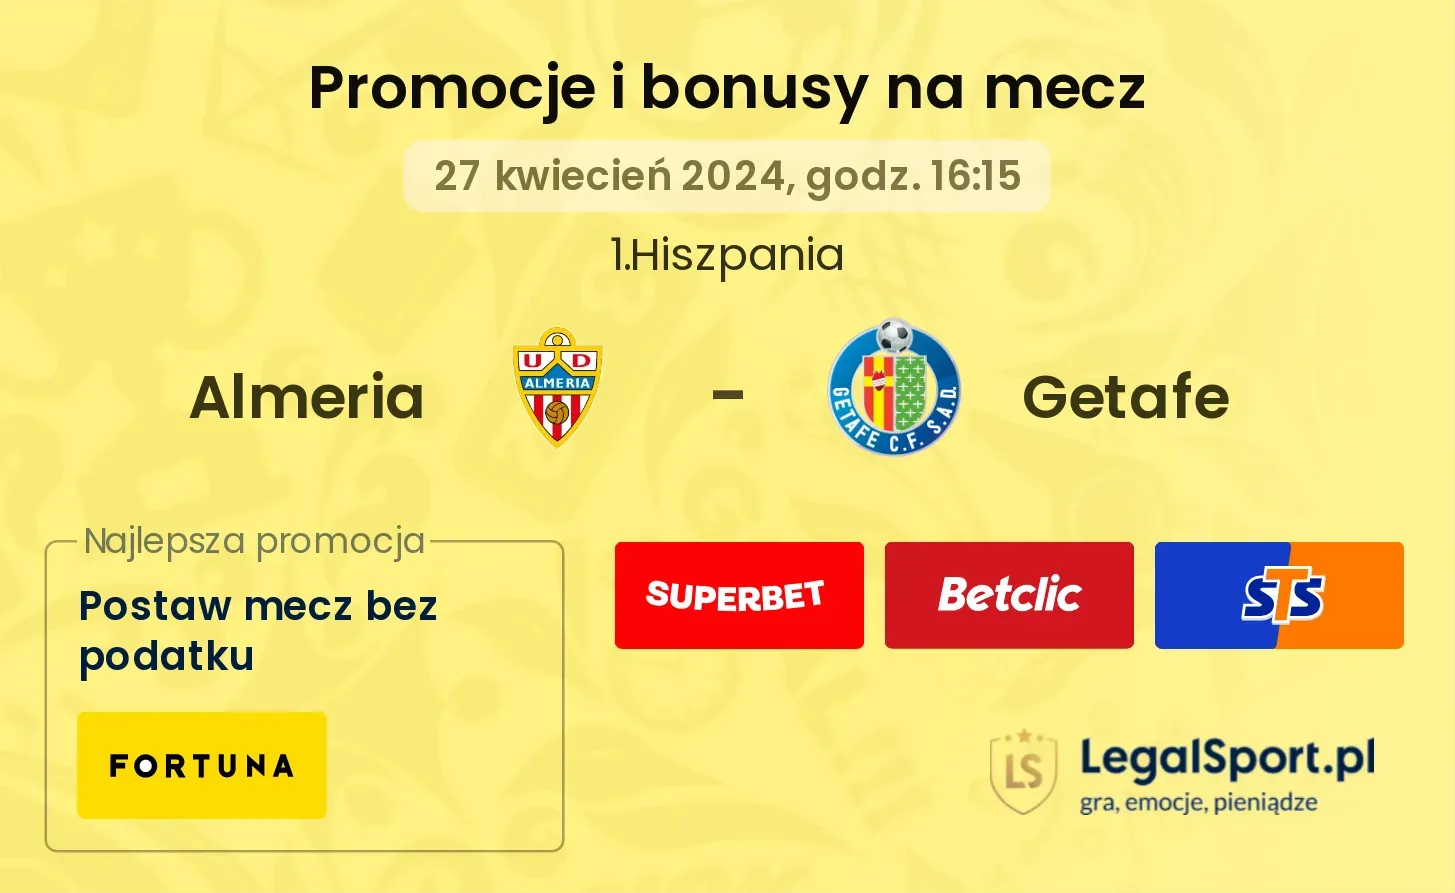 Almeria - Getafe promocje bonusy na mecz